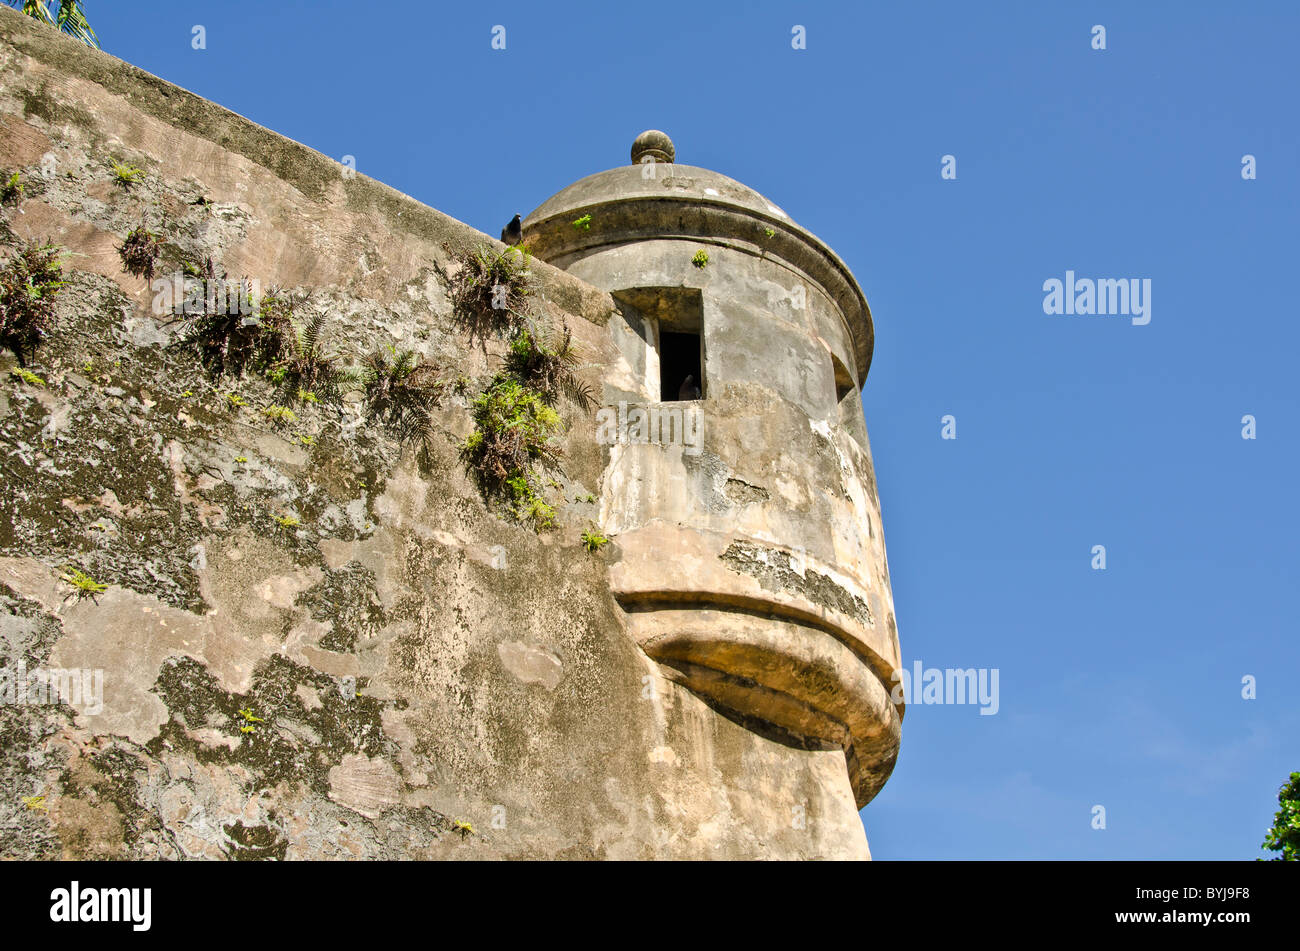 Puerto Rico San Juan alte Stadt Mauer Sentry Pappschachtel oder "Garita" Stockfoto